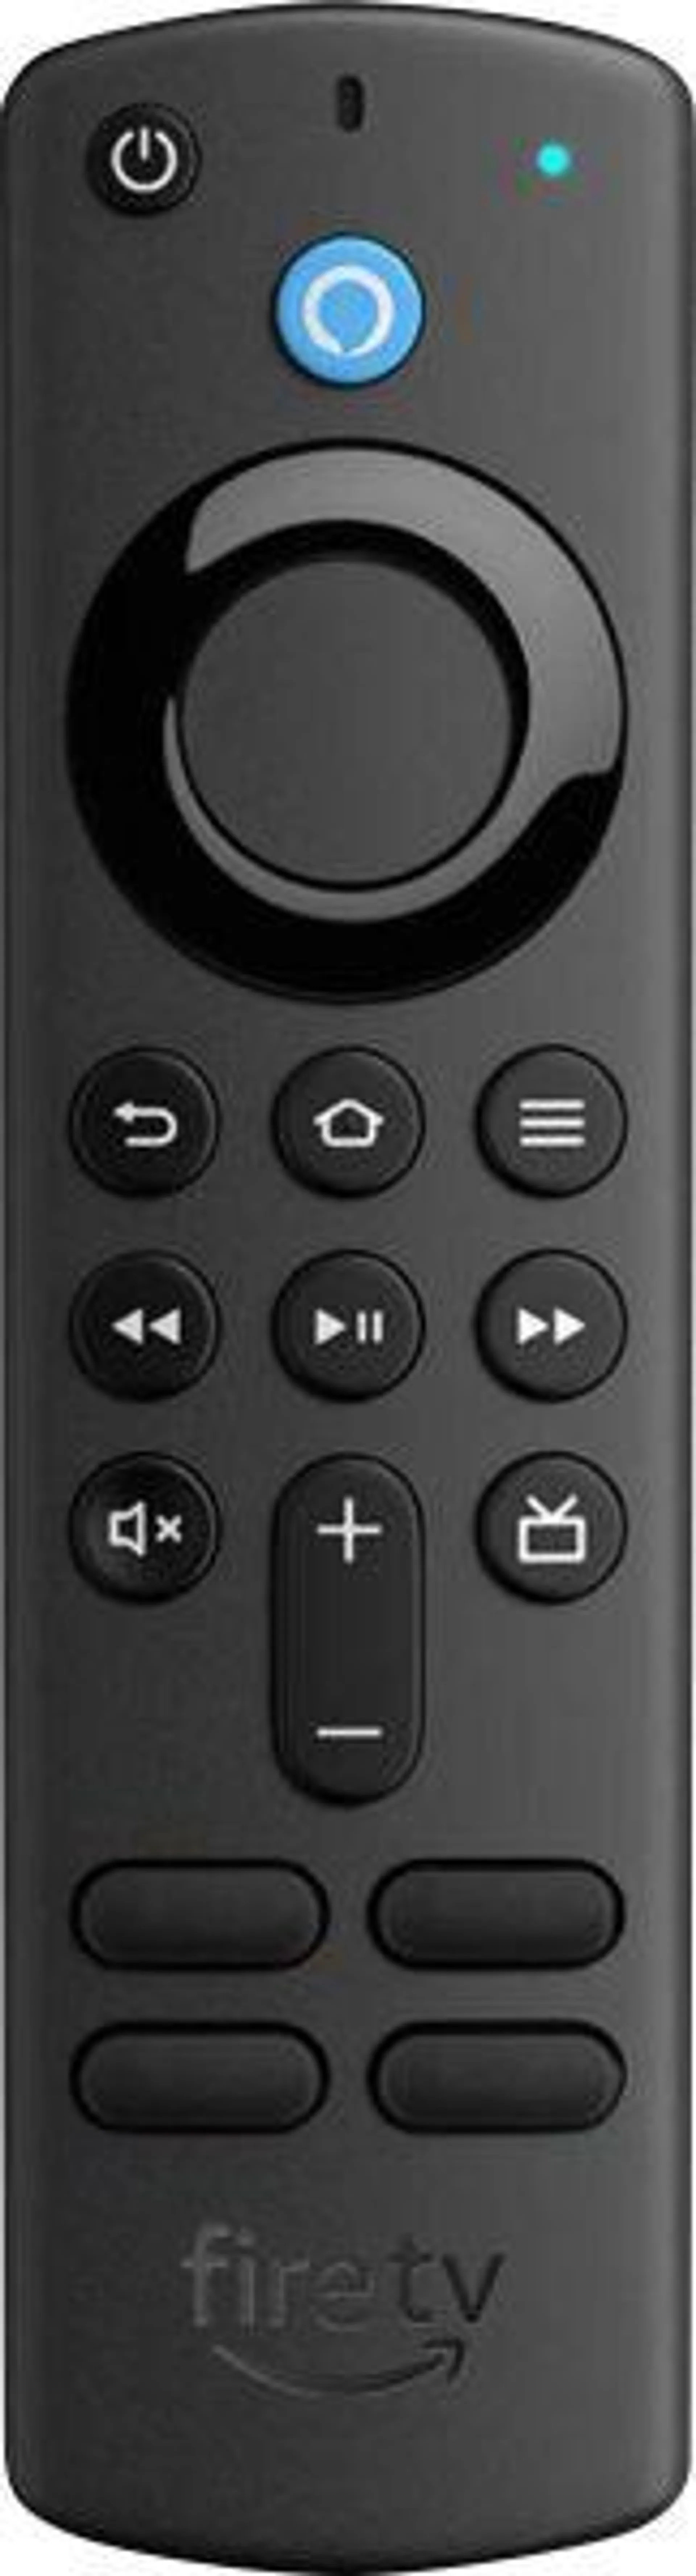 Amazon Alexa Voice Remote (3rd Gen) with TV controls 2021 release - Black